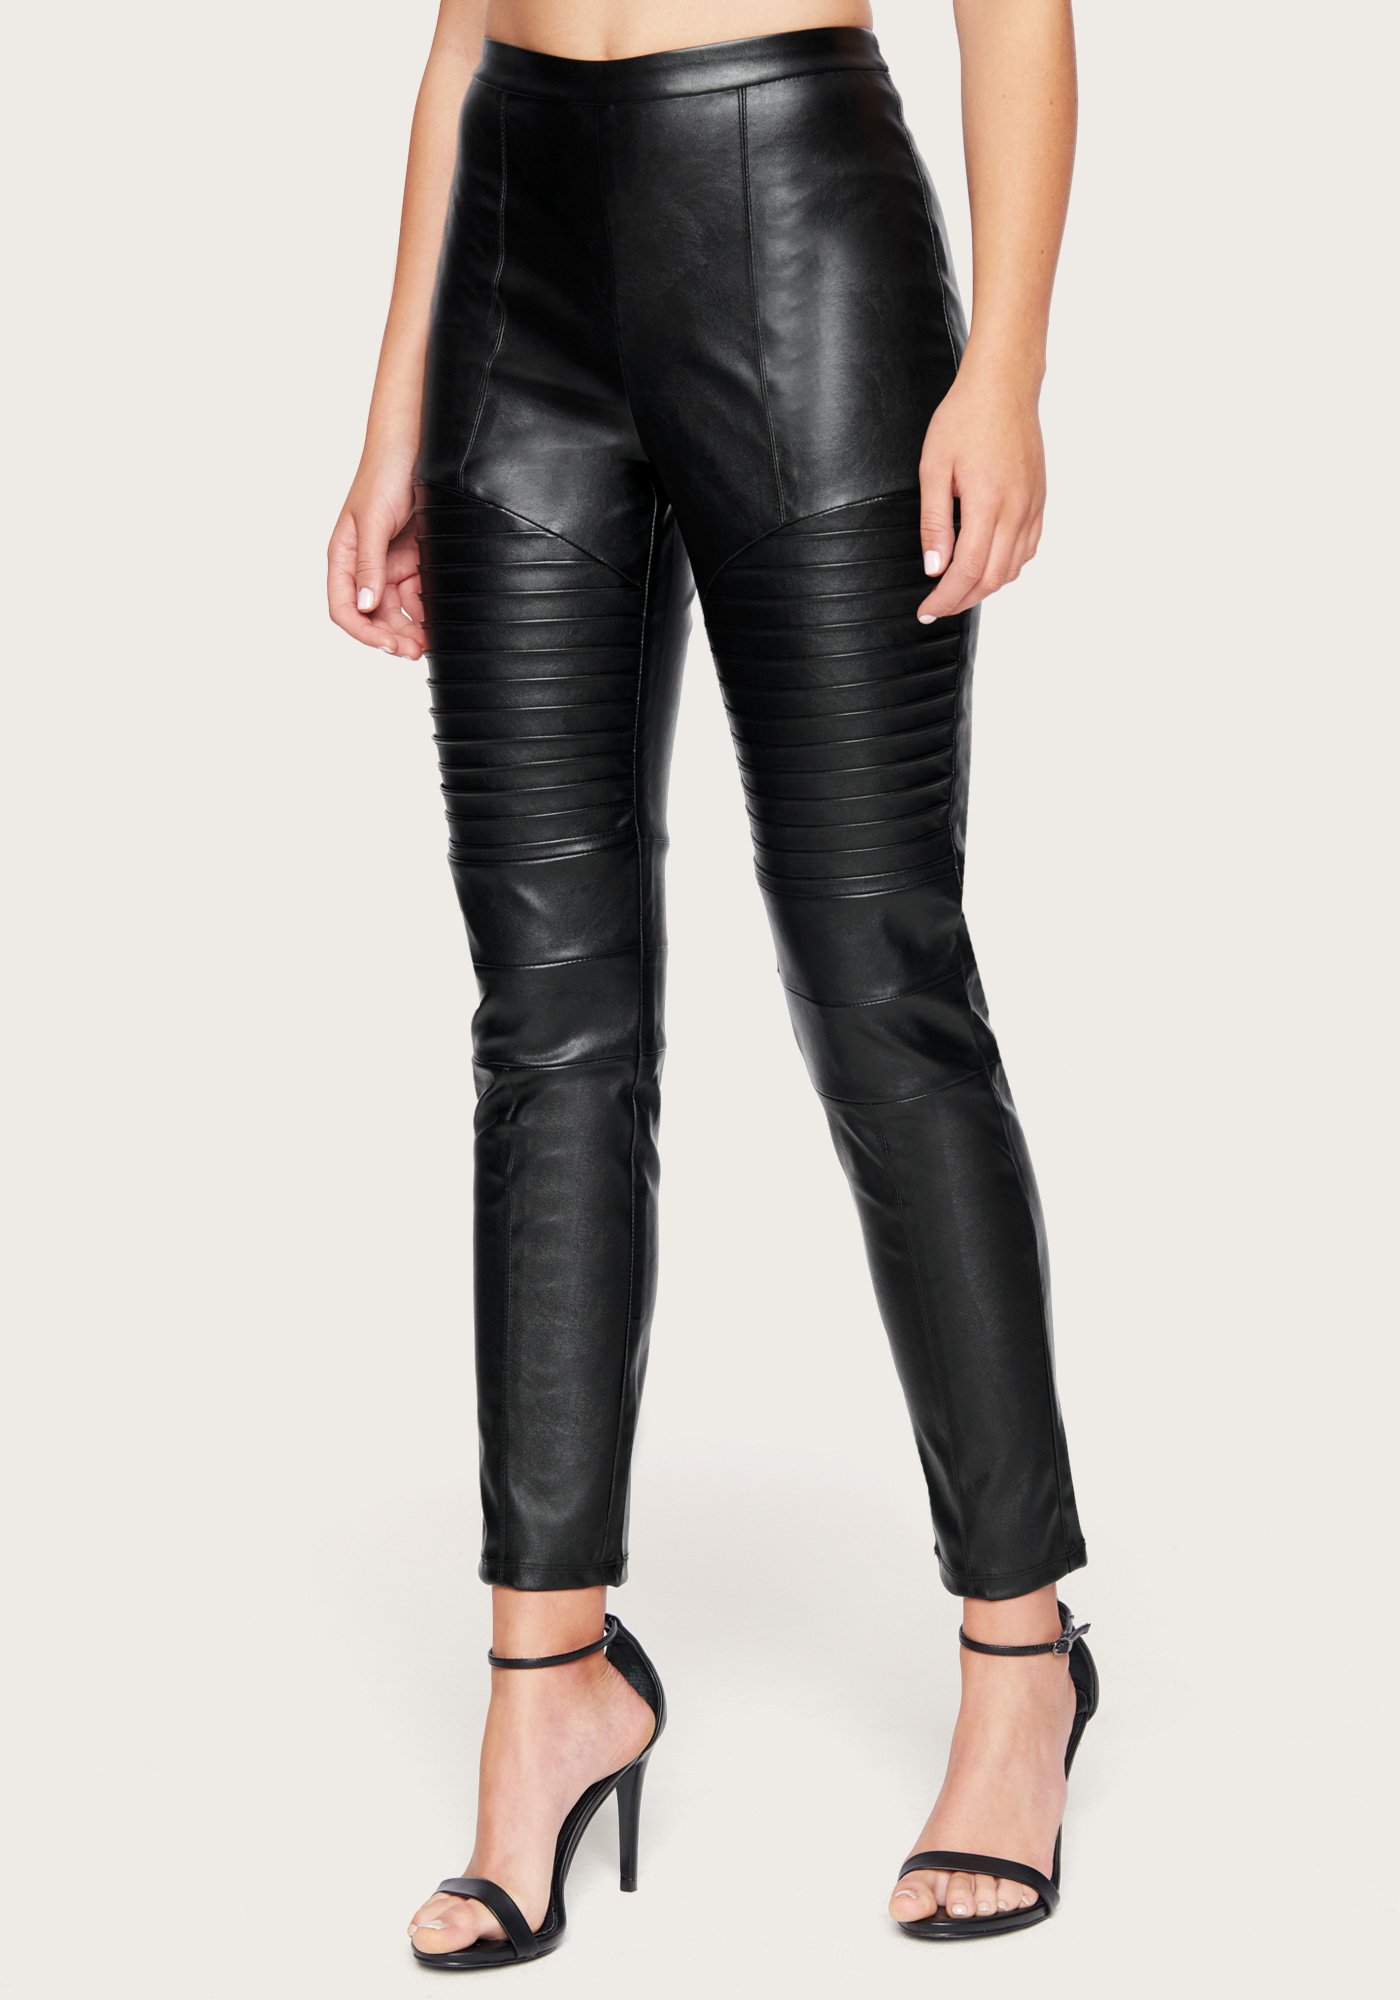 Bebe Women's Faux Leather Moto Leggings, Size XL in Black Polyurethane